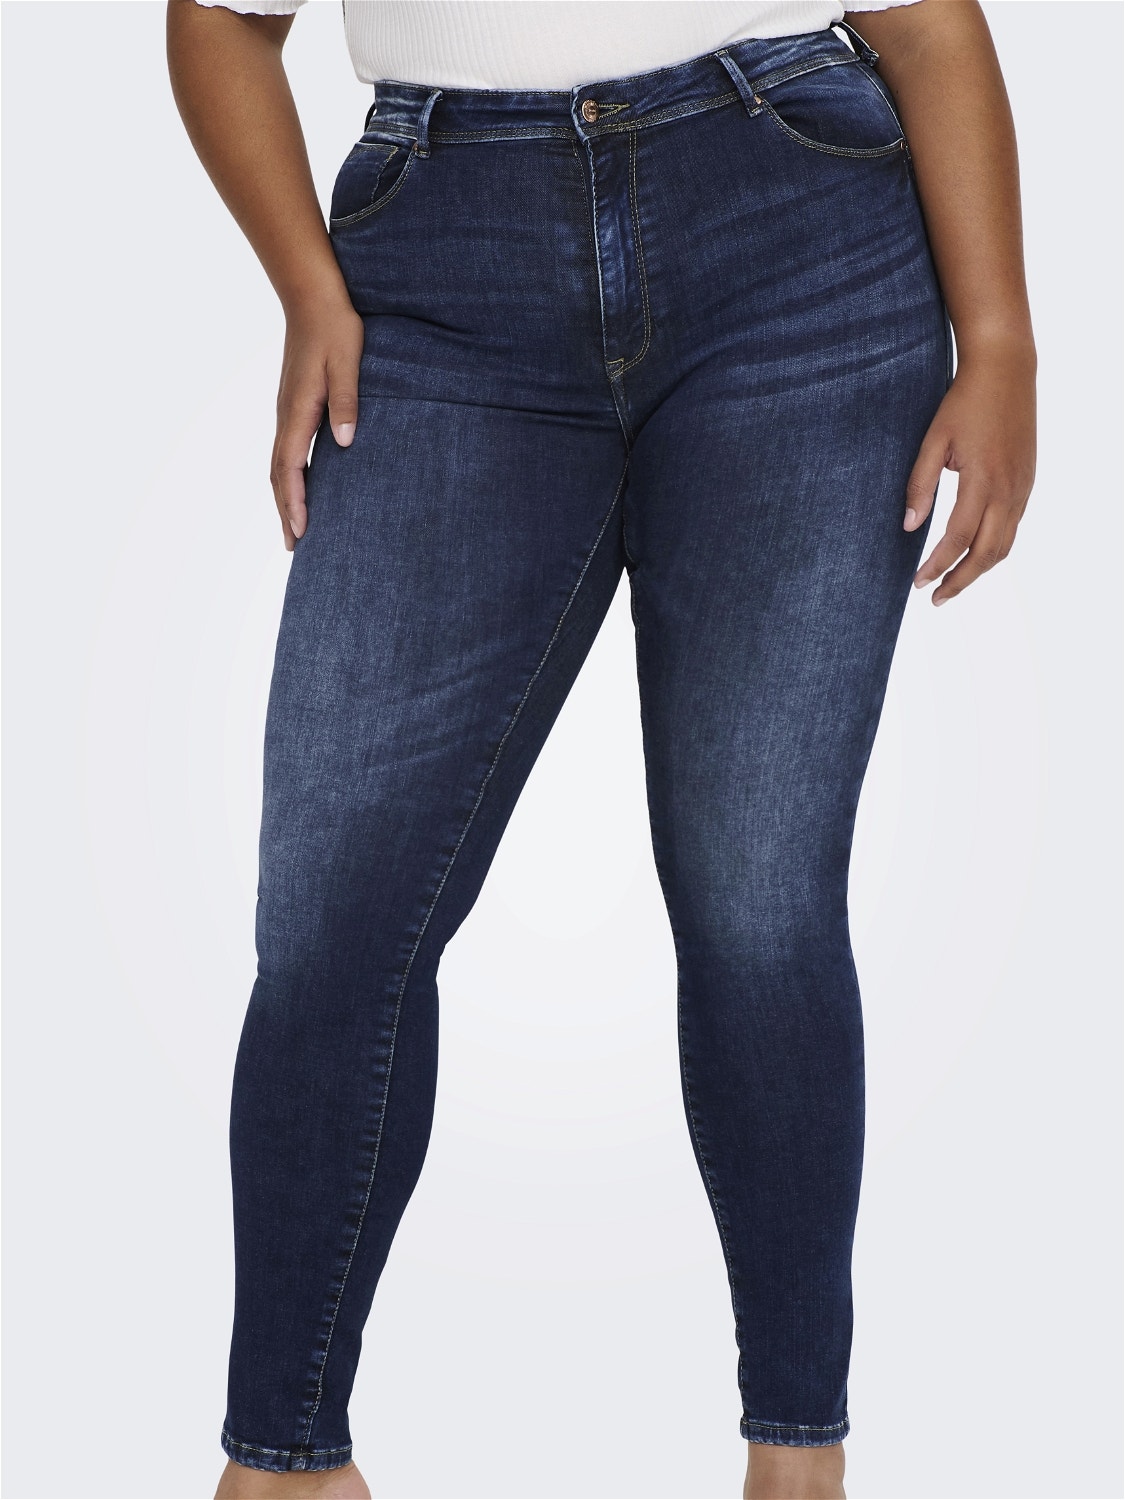 CARMaya | Curvy Rabatt Skinny Jeans Fit Reg auf 20% Shape ONLY®